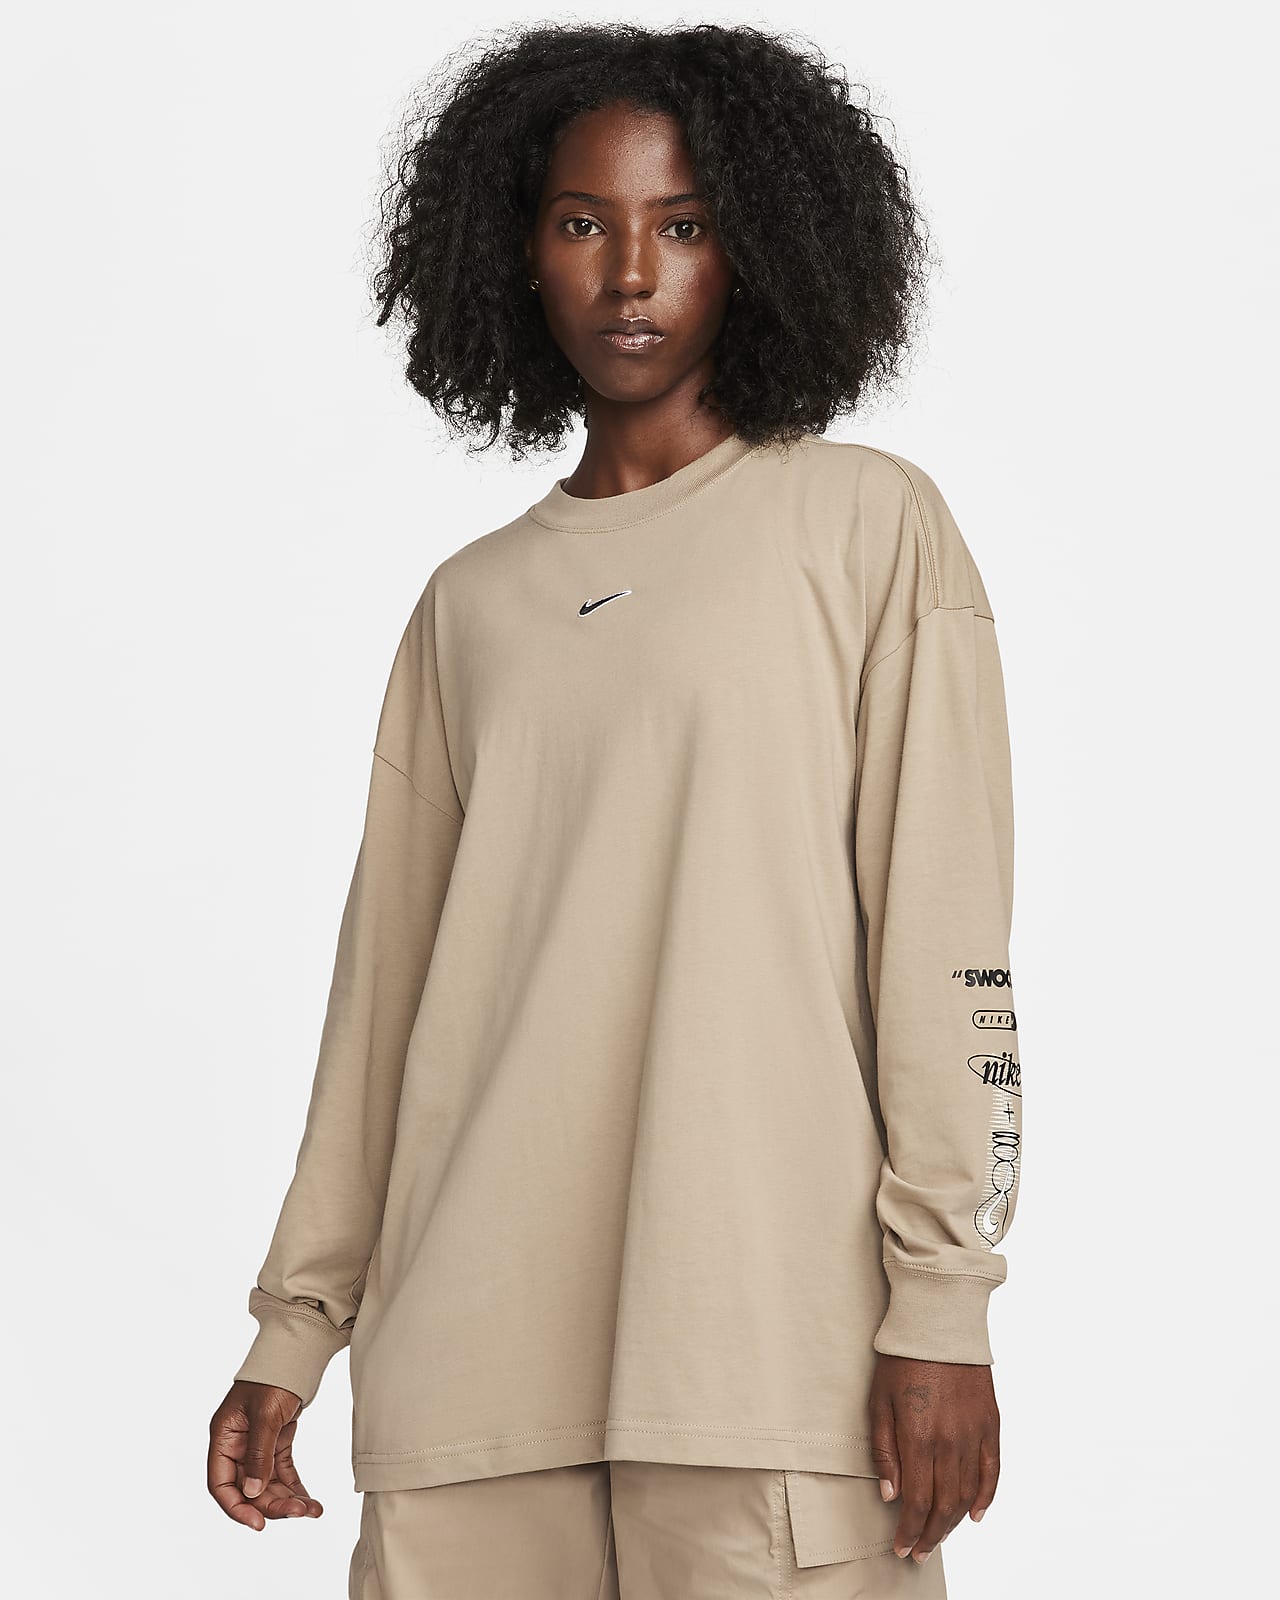 Nike Women's T-Shirts, Tank Tops & Long Sleeve Tees